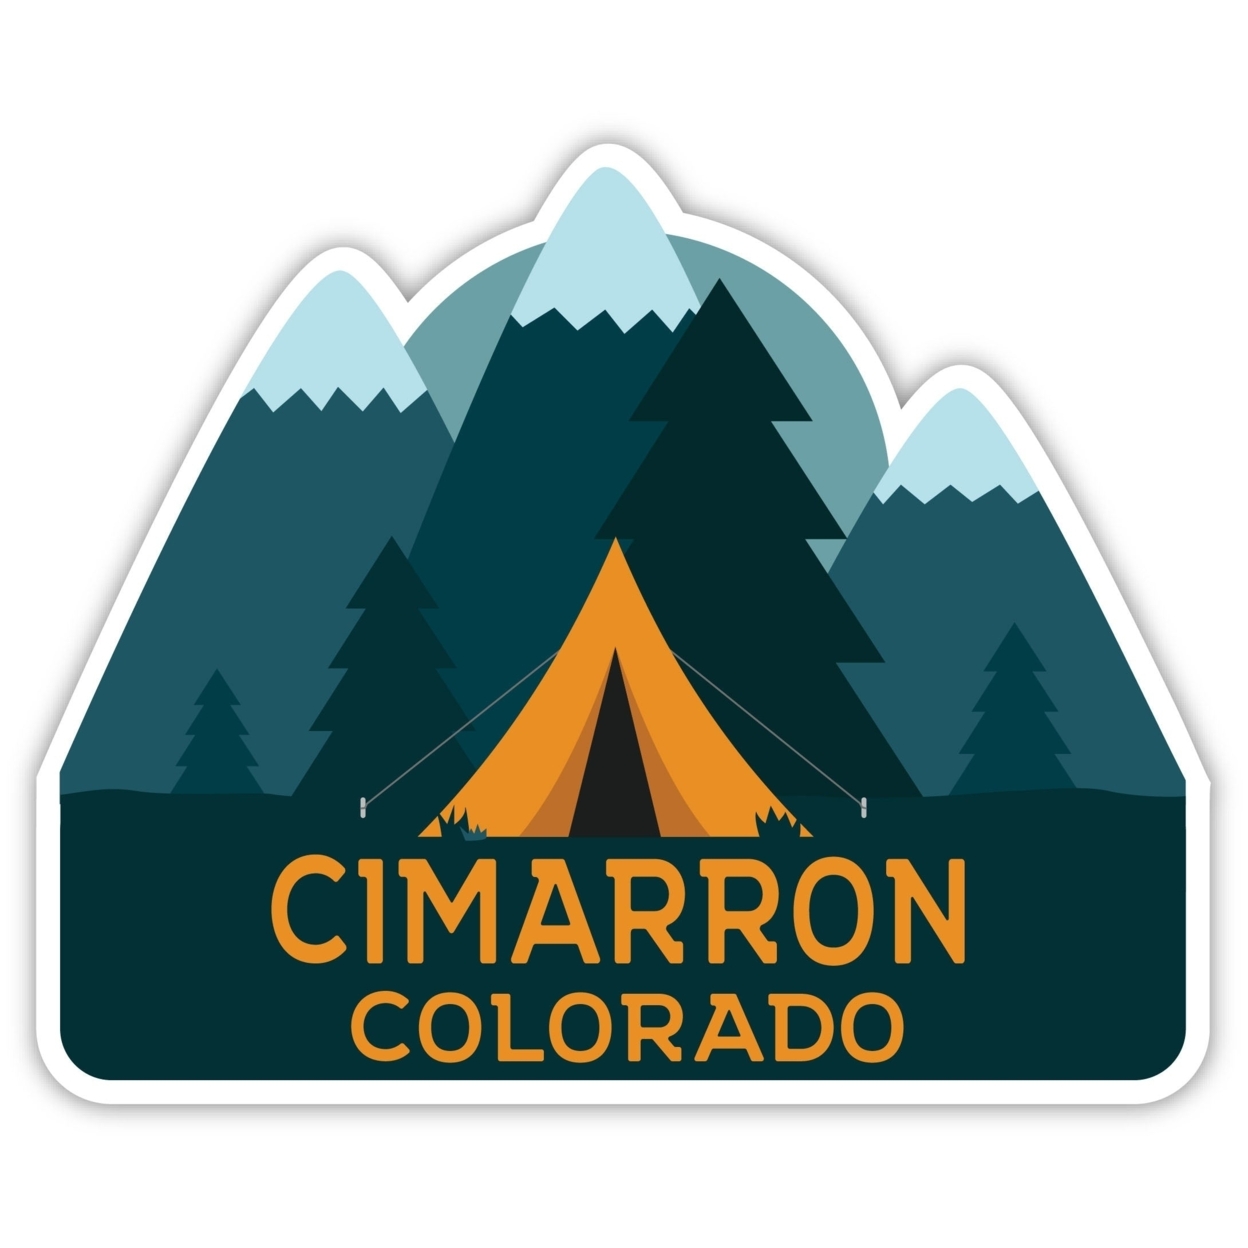 Cimarron Colorado Souvenir Decorative Stickers (Choose Theme And Size) - 4-Pack, 2-Inch, Tent